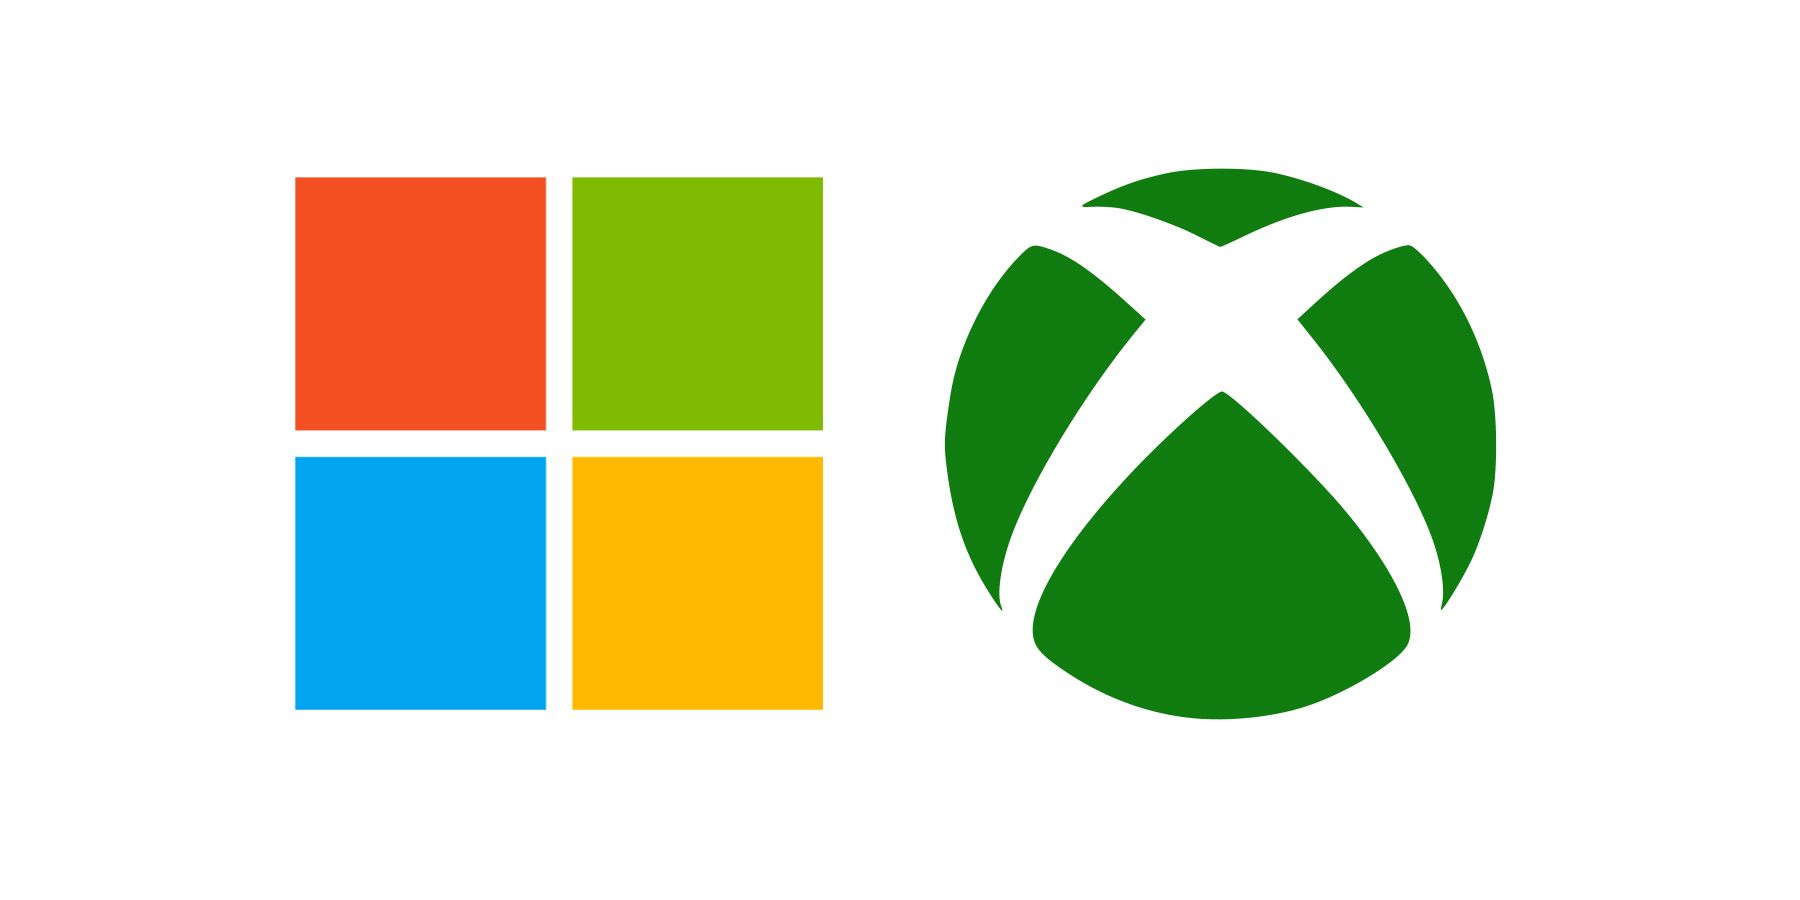 Microsoft Emblem next to Xbox logo on white background